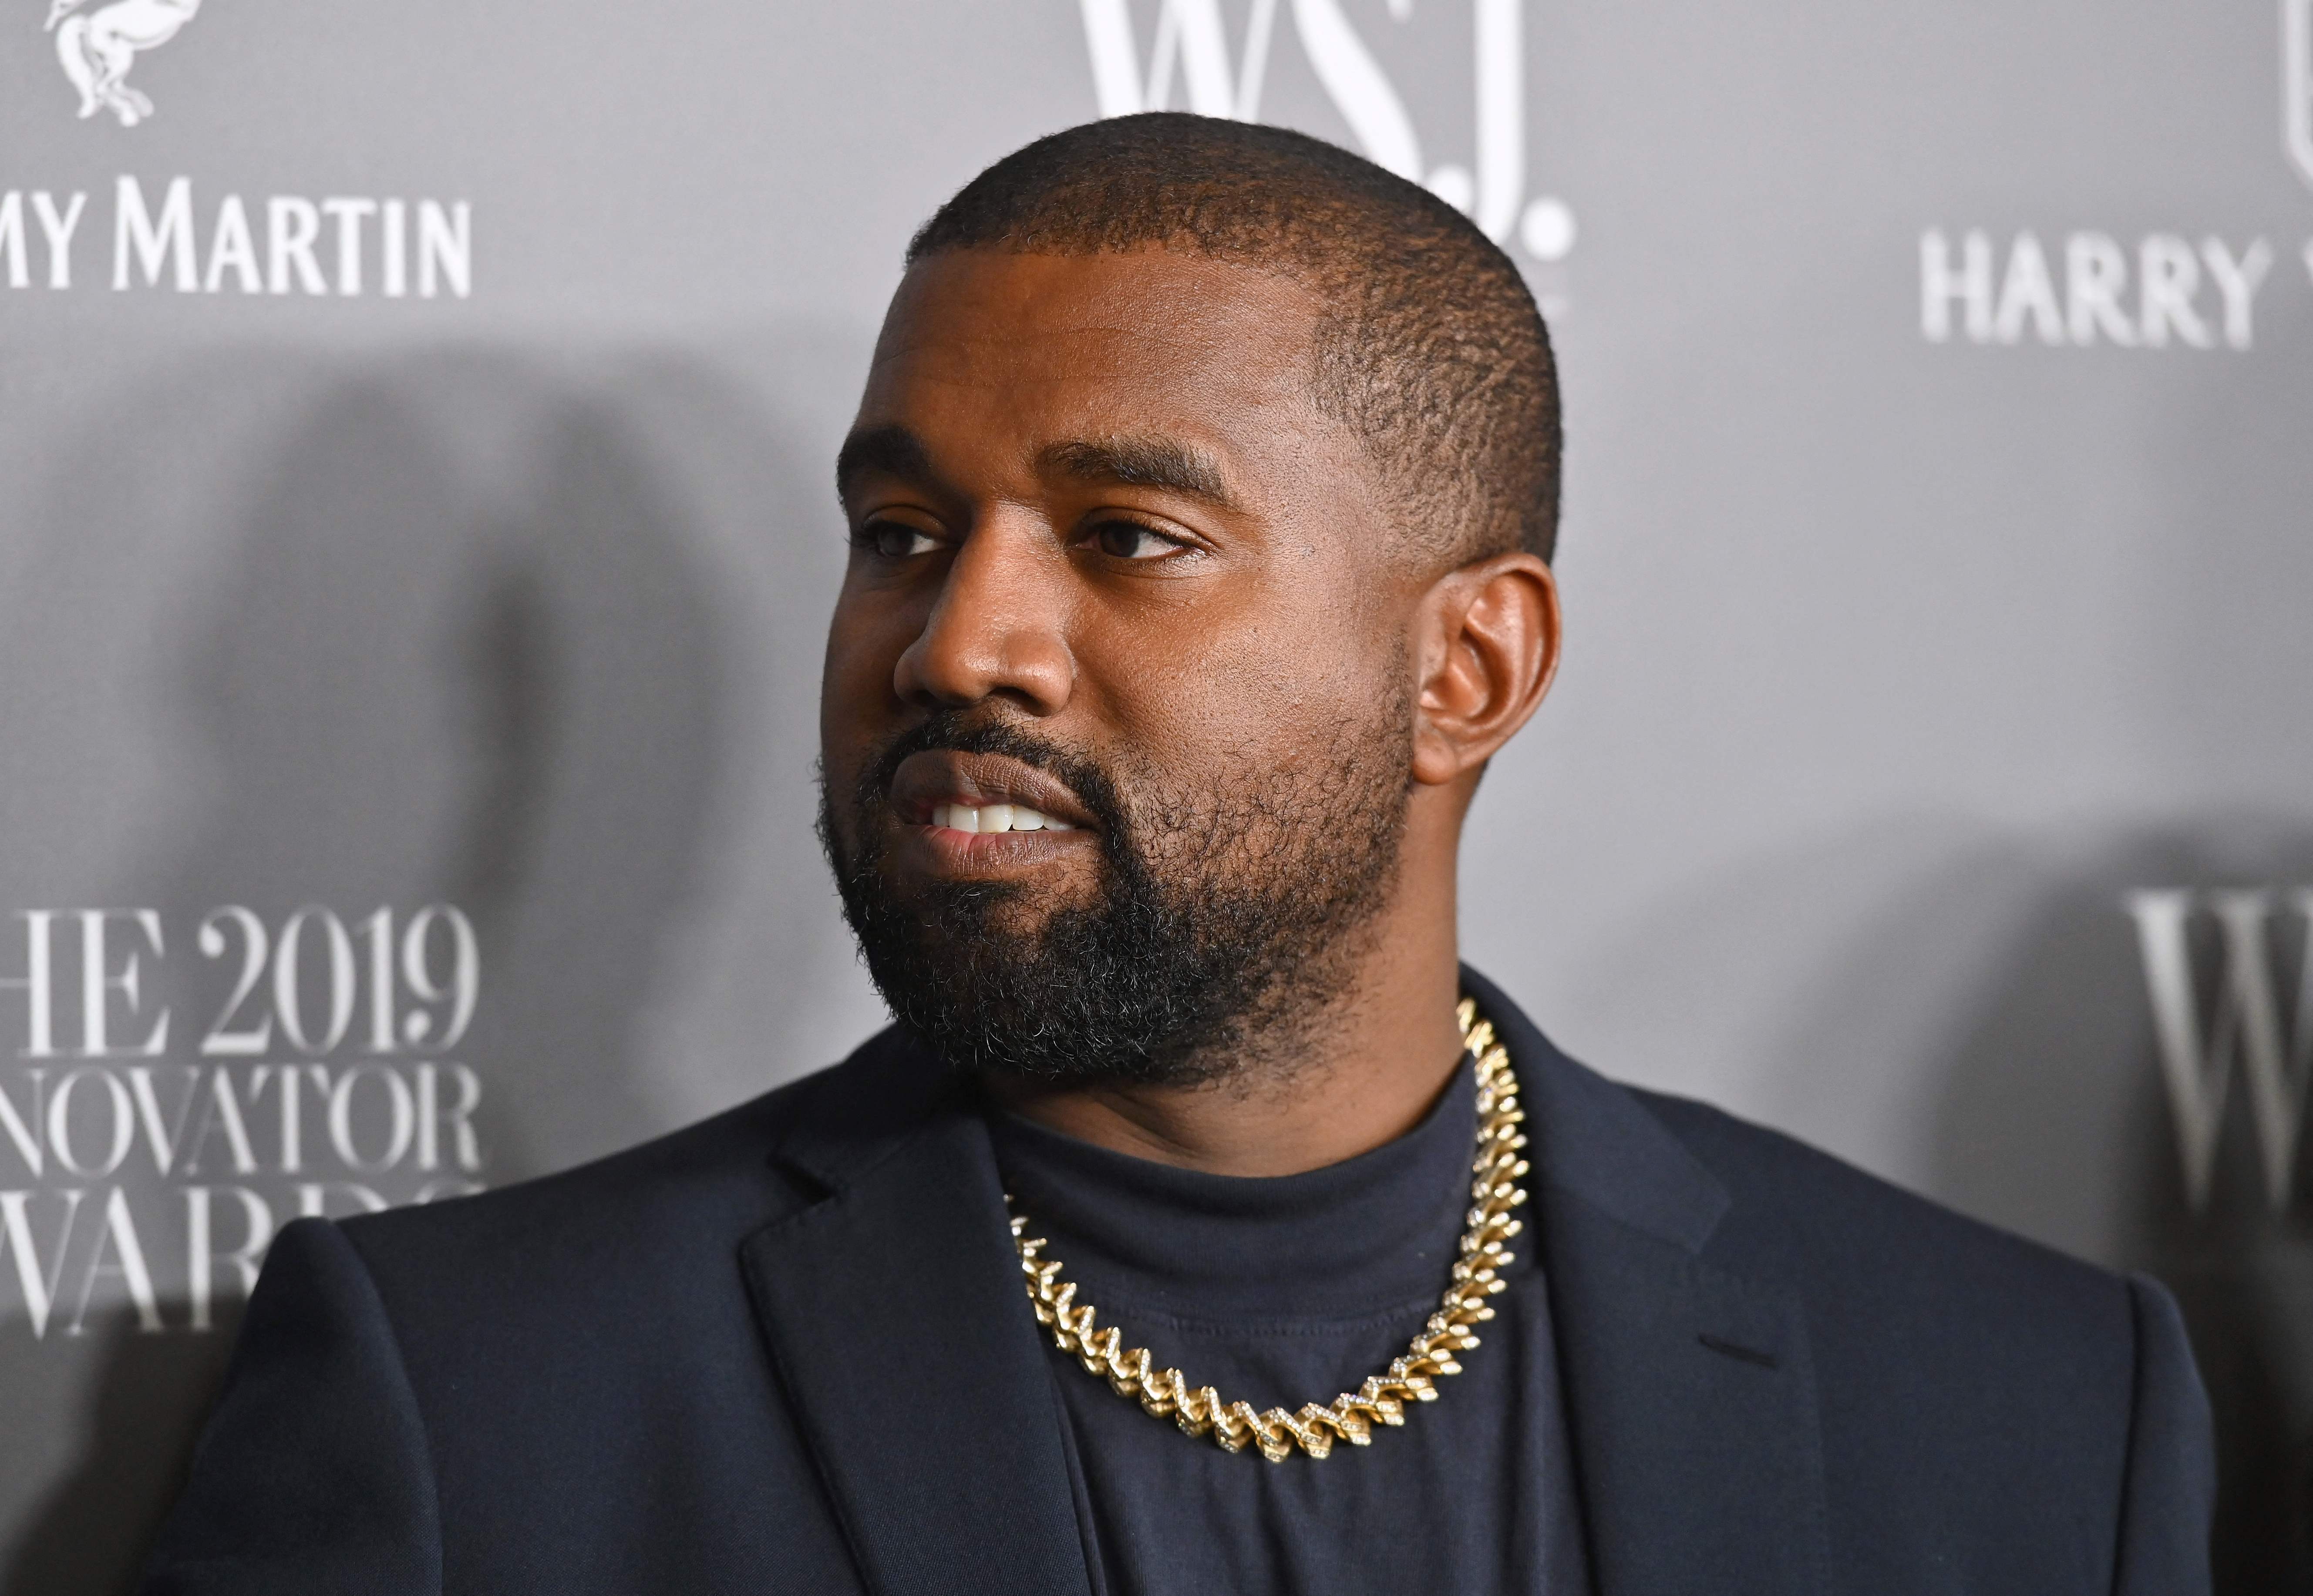 Adidas drops Kanye from partnership following antisemitic remarks